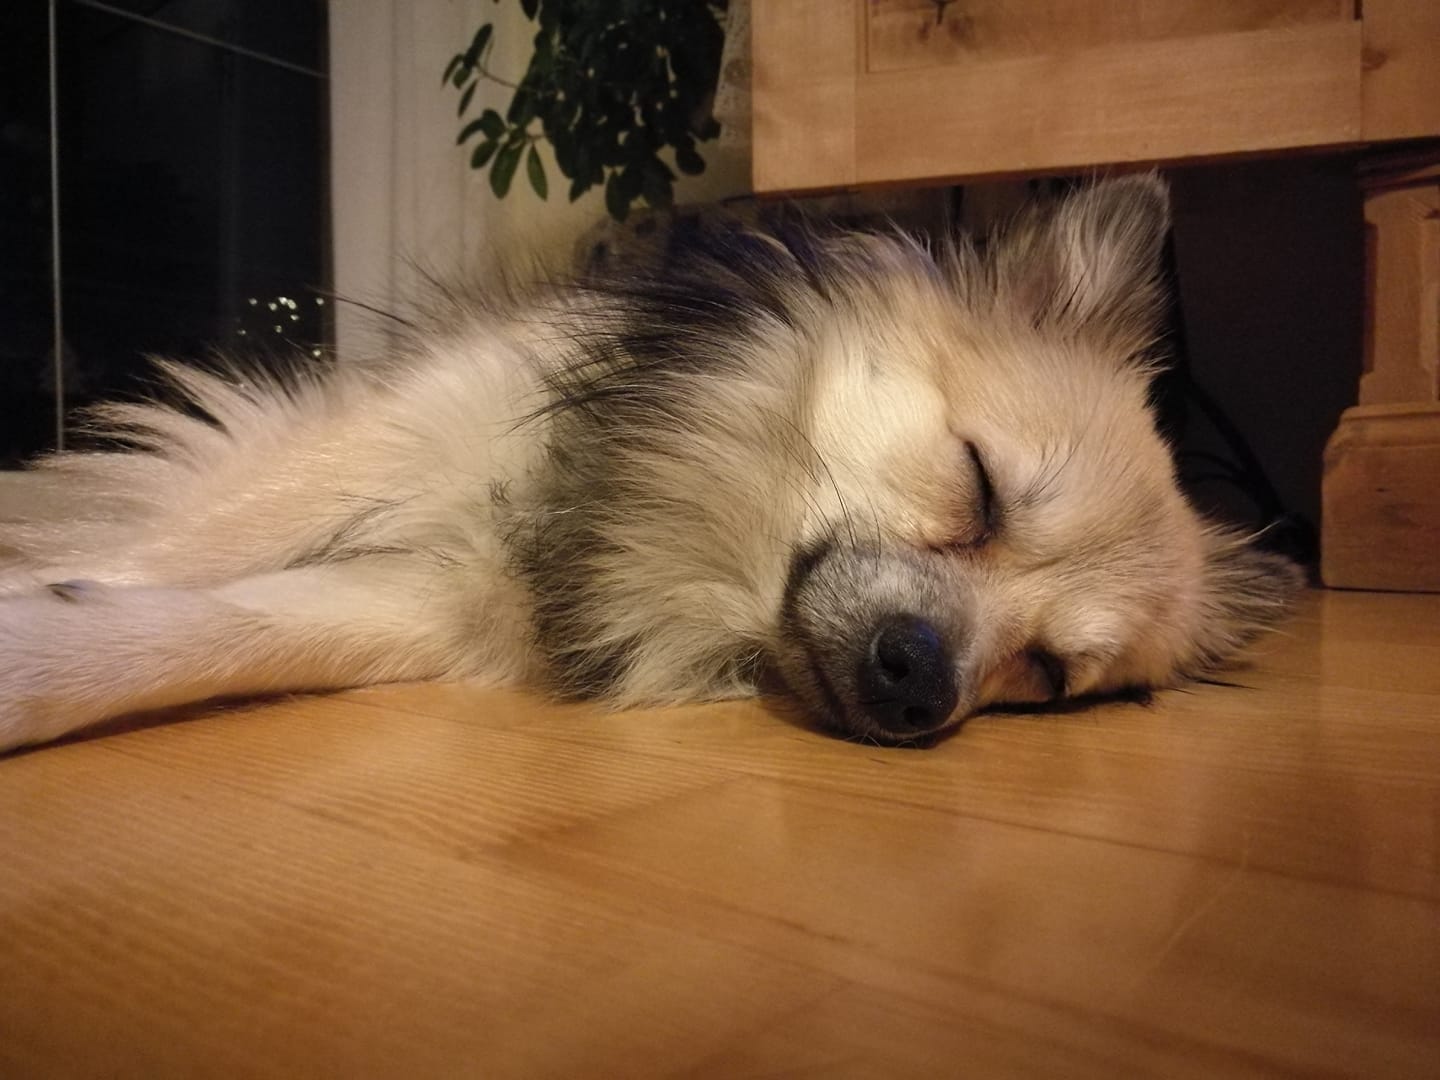 Pomeranian sleeping soundly on the floor